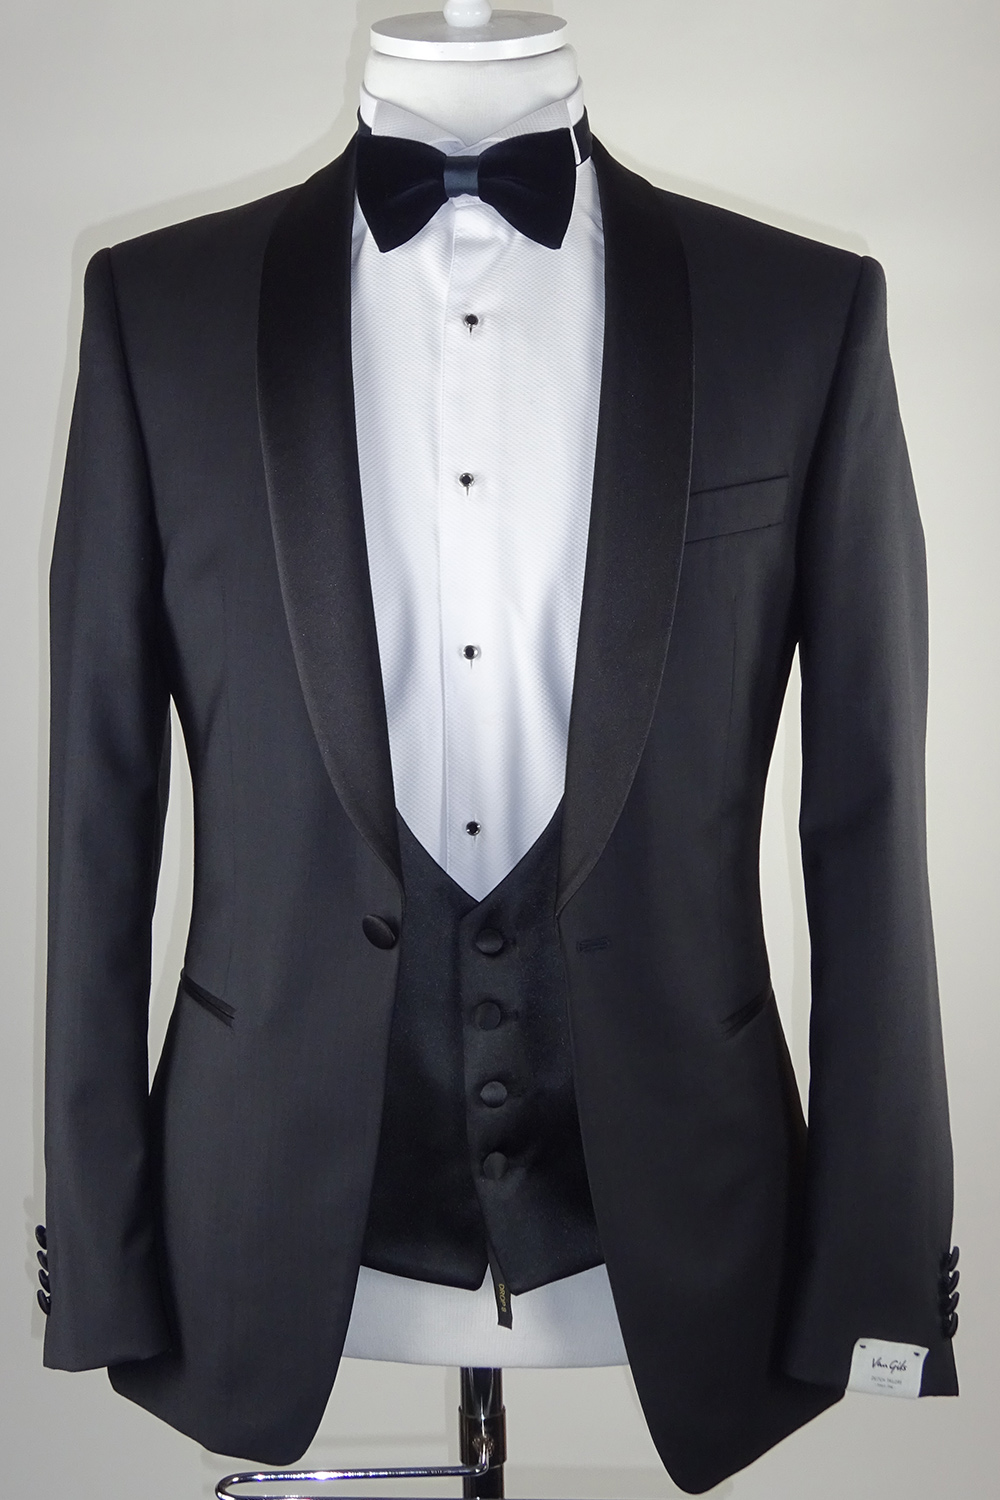 Black Wedding Tuxedo2 